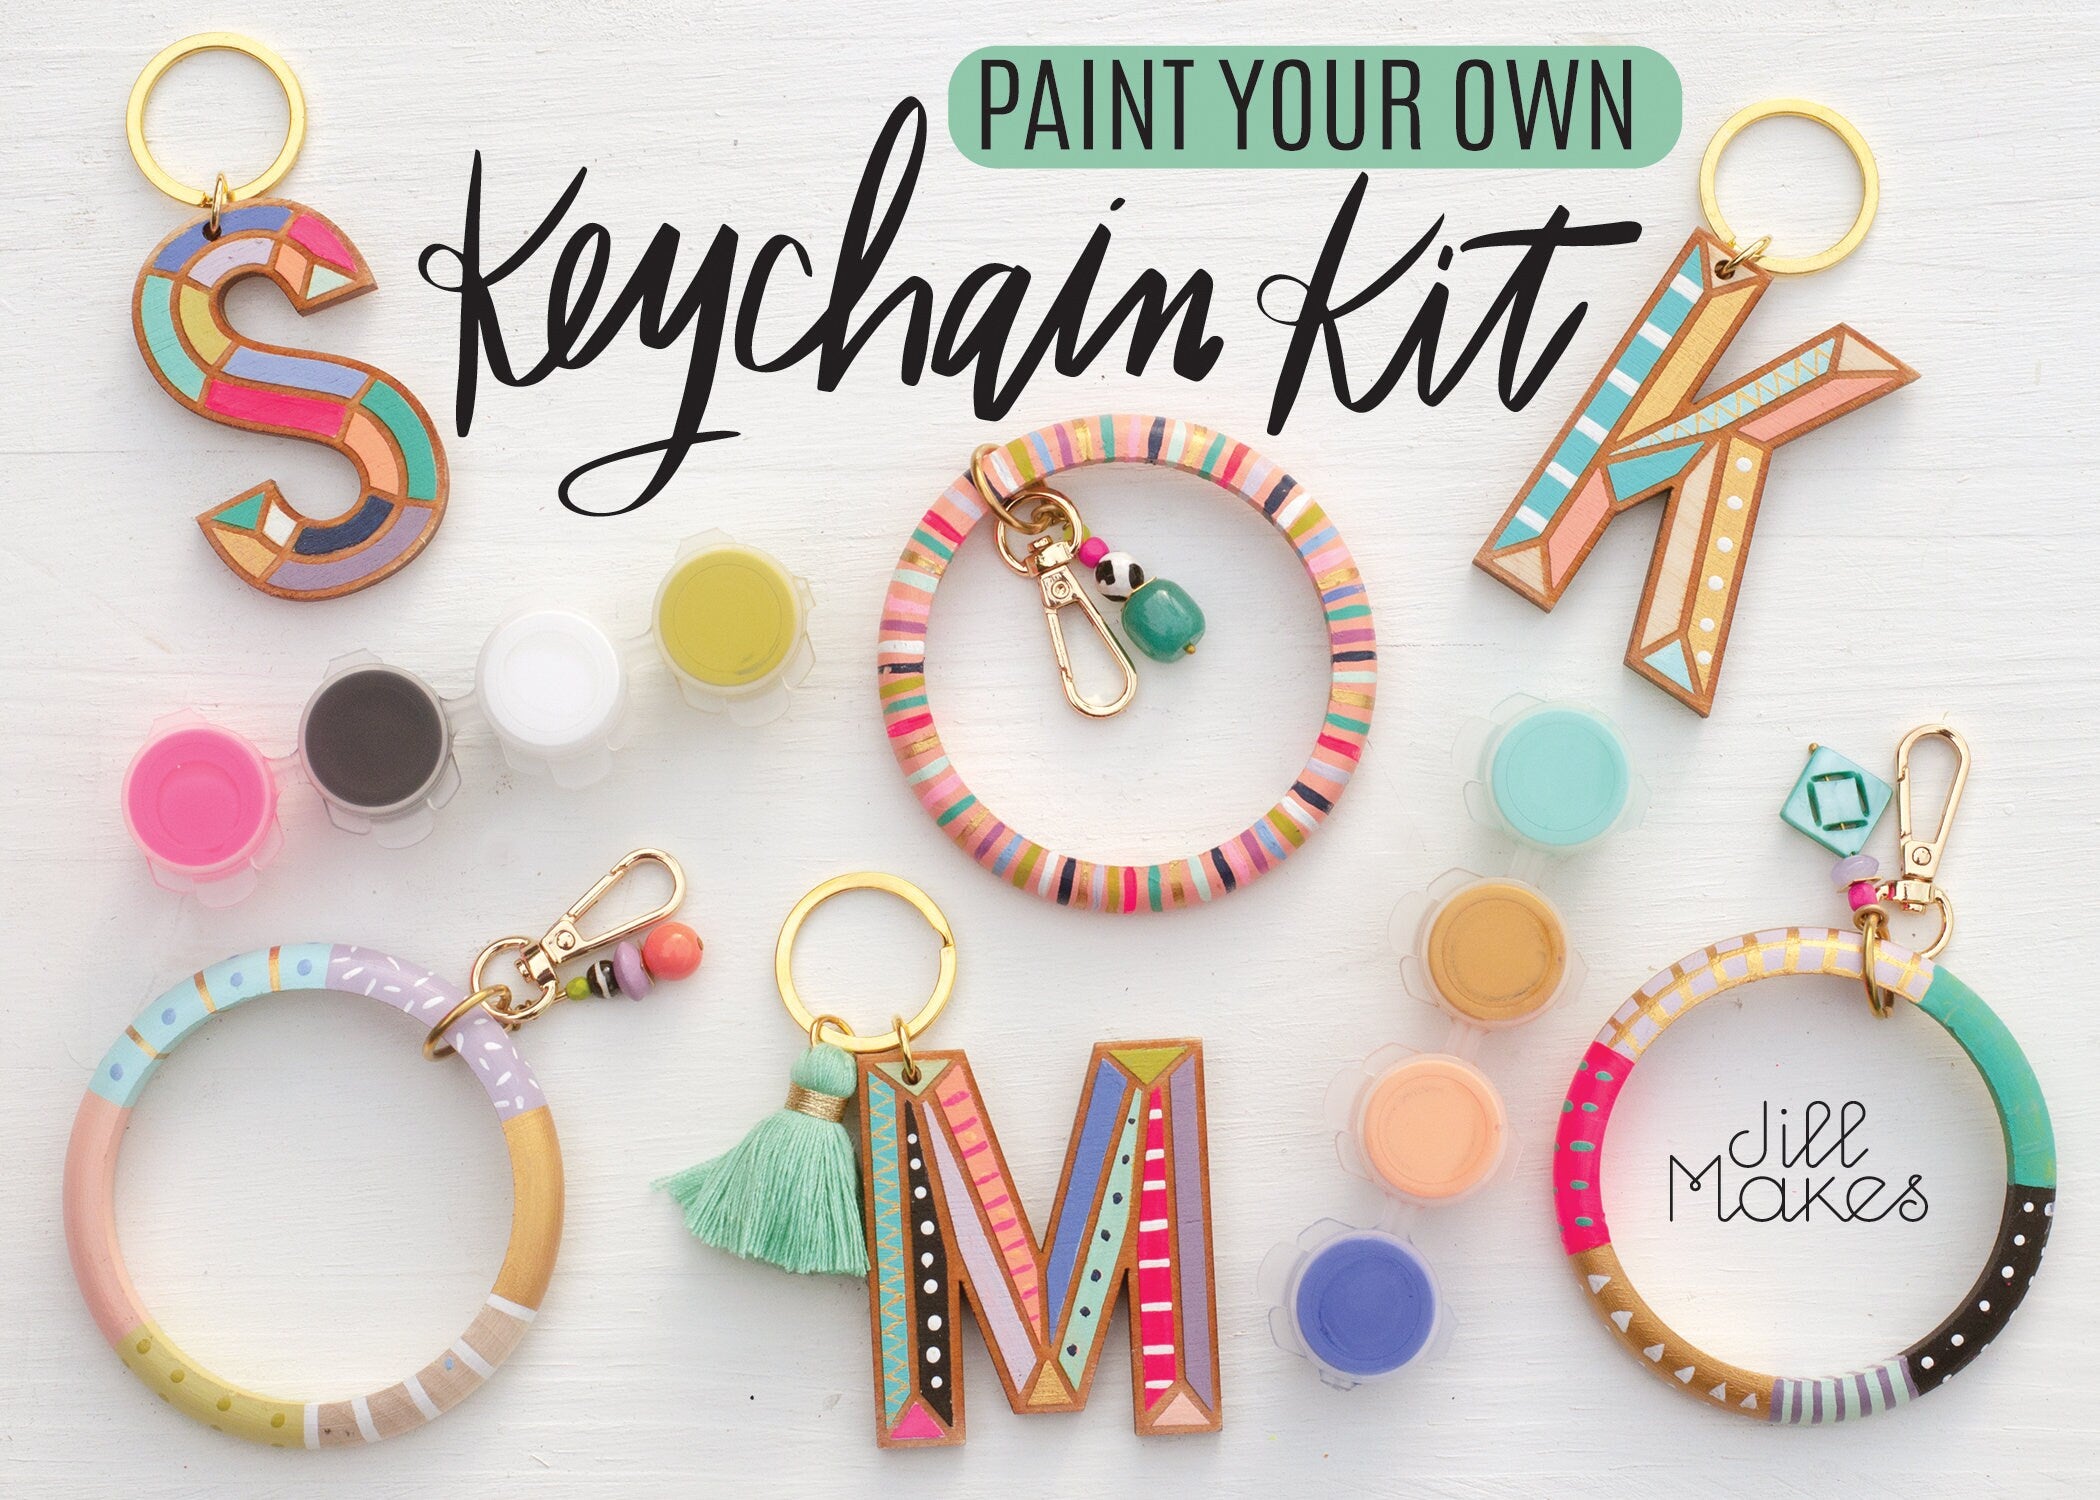 Keychain making kit, DIY keychain kit, Diy craft kit, Bead crochet